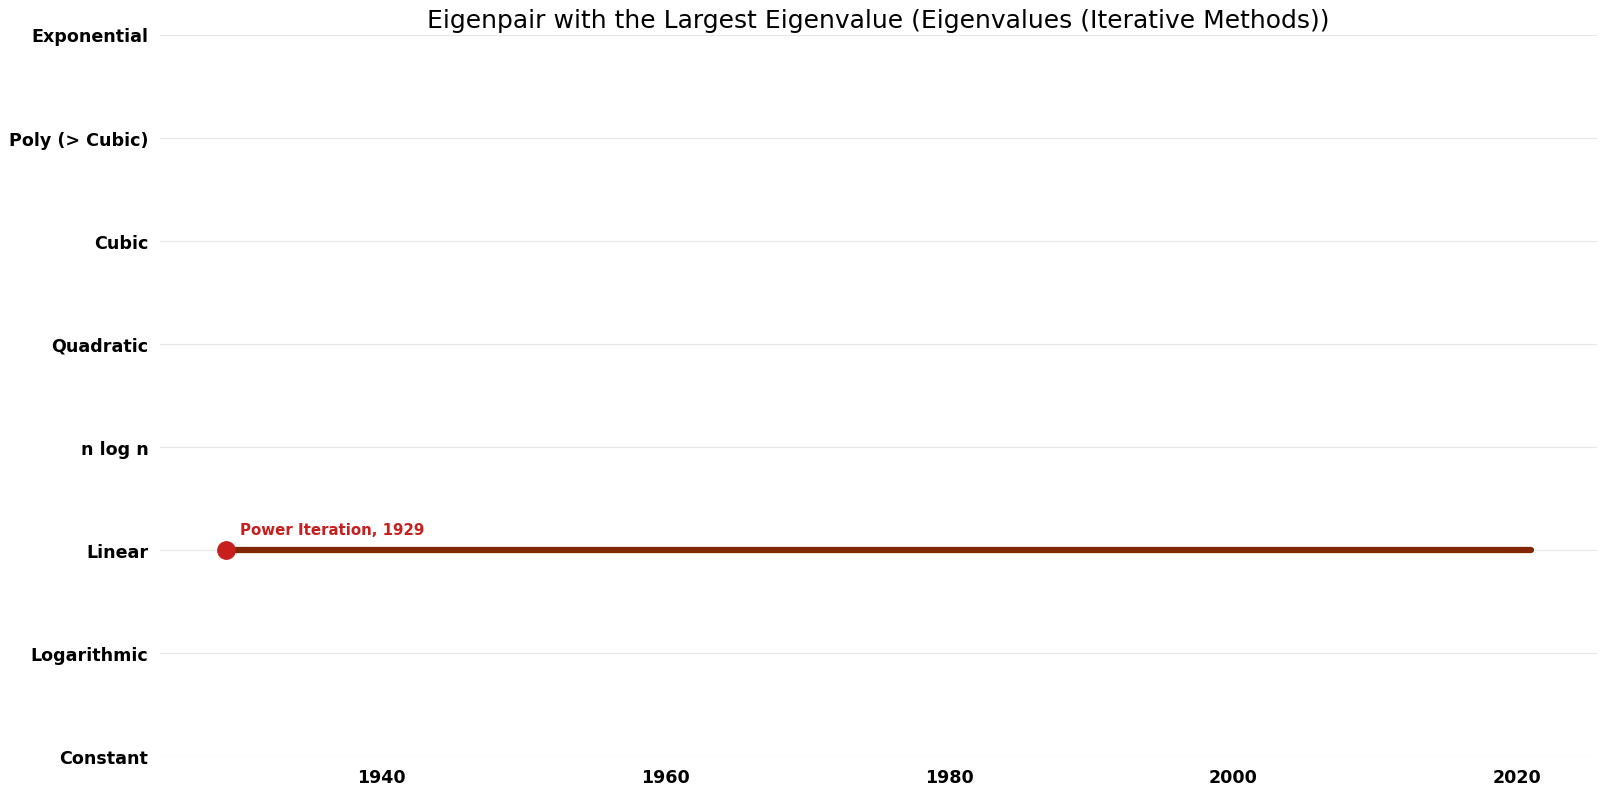 Eigenvalues (Iterative Methods) - Eigenpair with the Largest Eigenvalue - Space.png